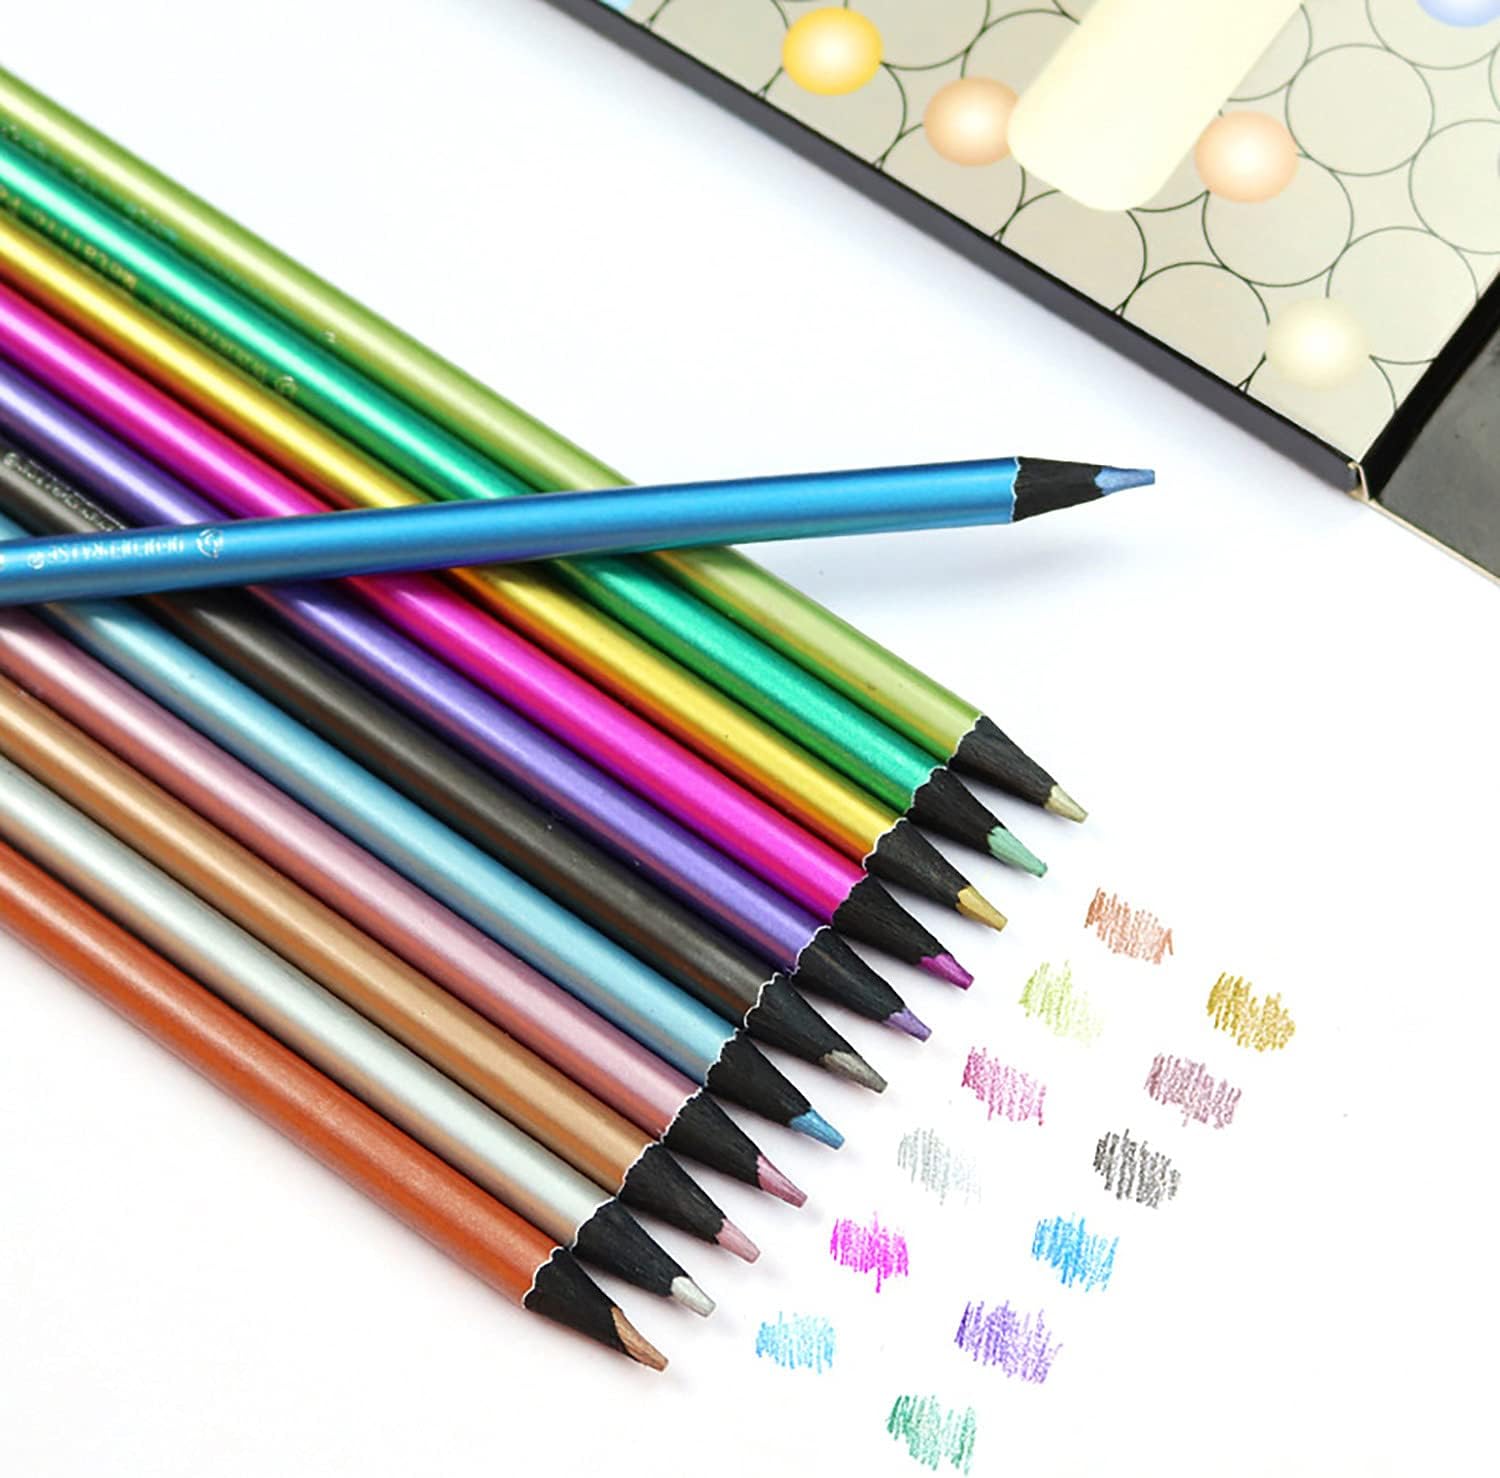 12pcs Metallic Colored Drawing Pencils